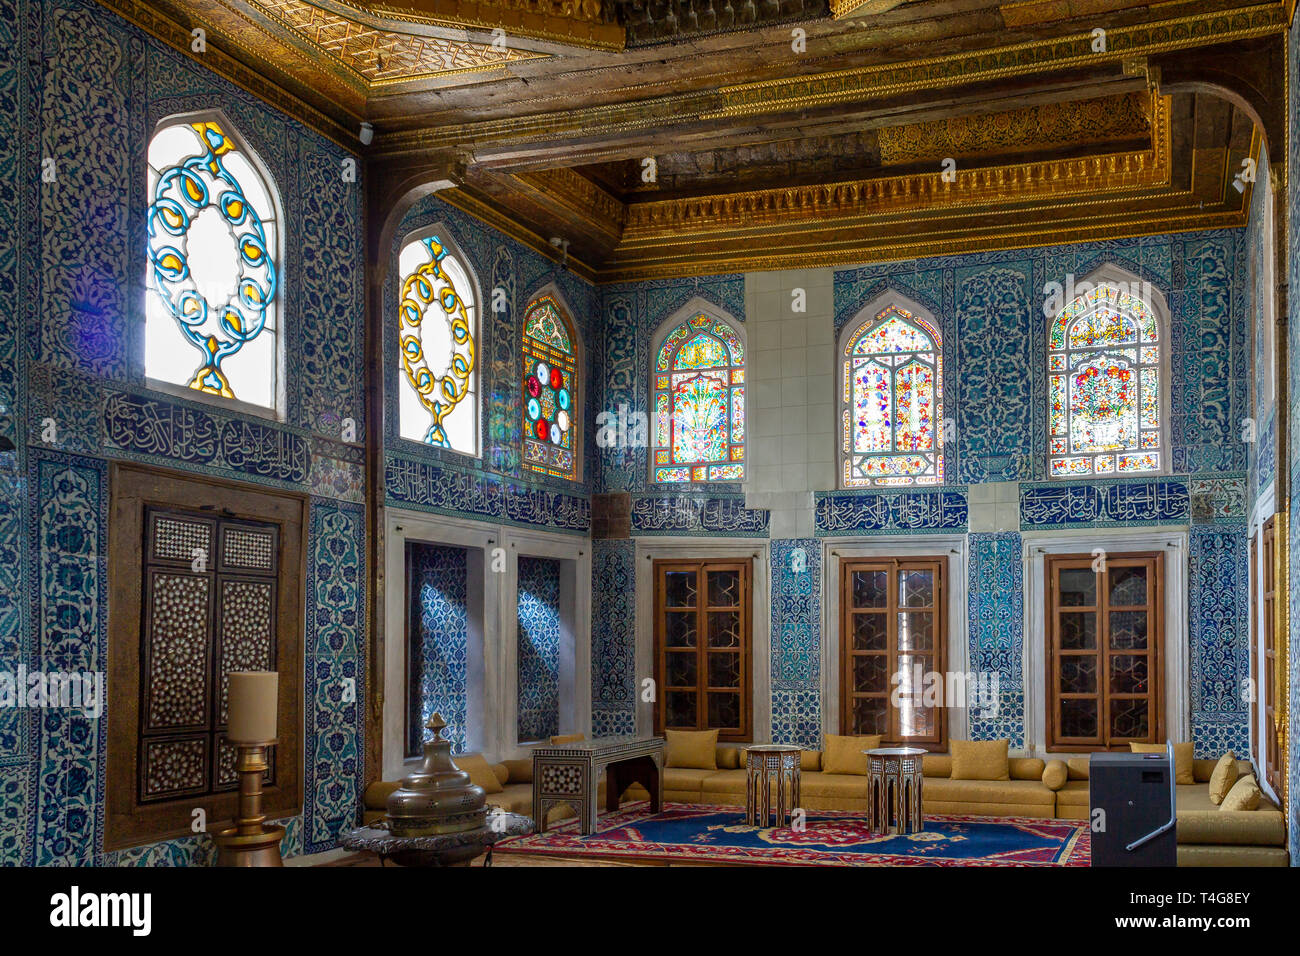 https://c8.alamy.com/comp/T4G8EY/eminonu-istanbul-turkey-february-19-2019-yeni-cami-hunkar-kasri-museum-interior-view-classic-ottoman-turkish-architecture-house-T4G8EY.jpg